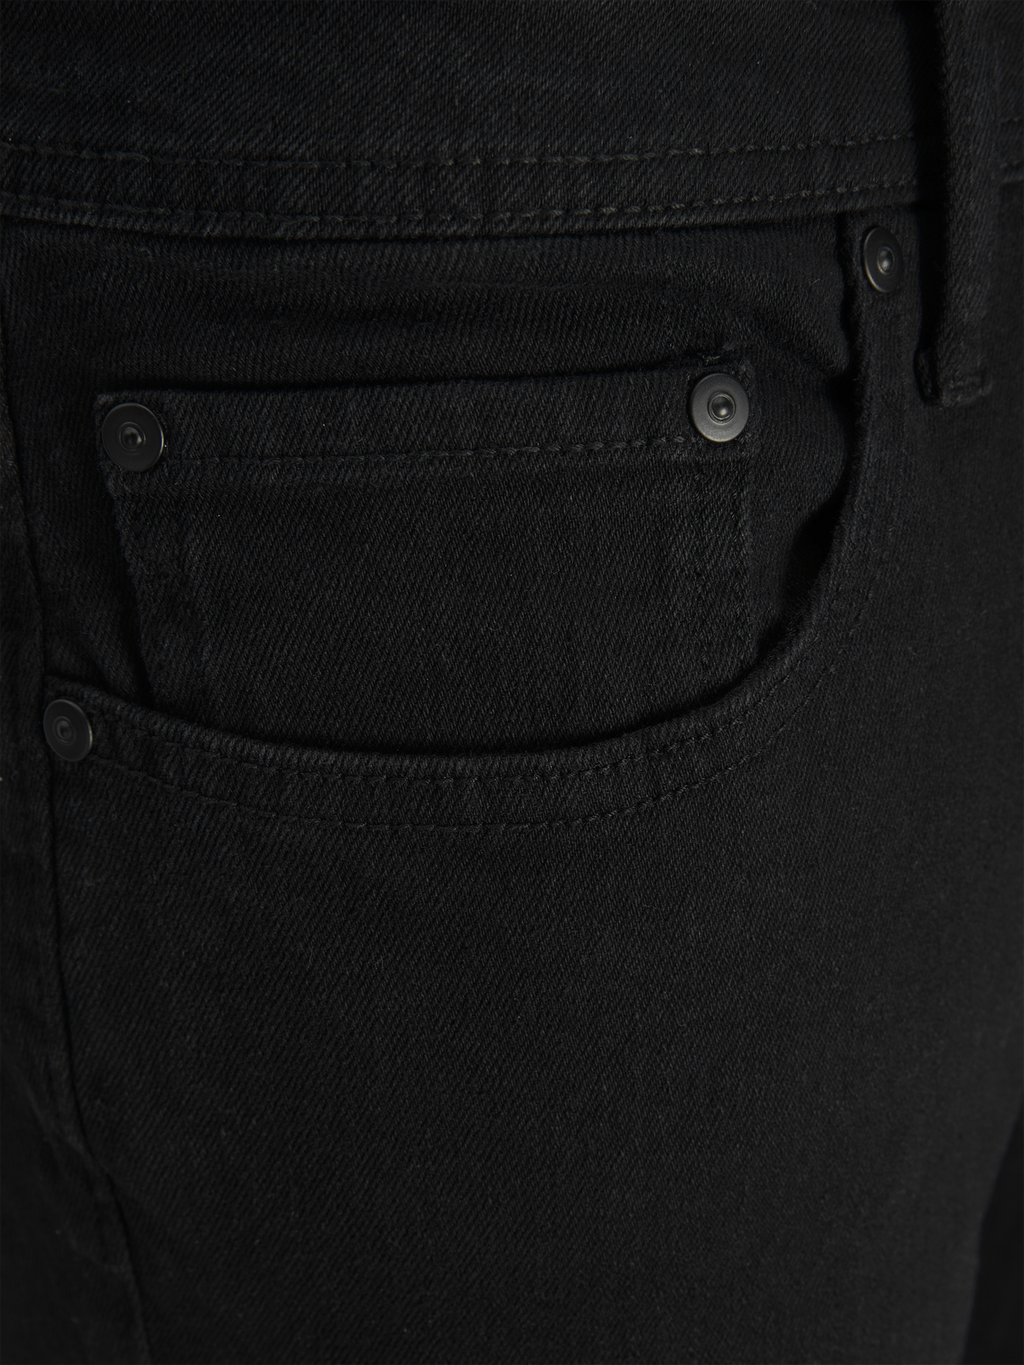 Performance Jeans (Regular) - Black Denim